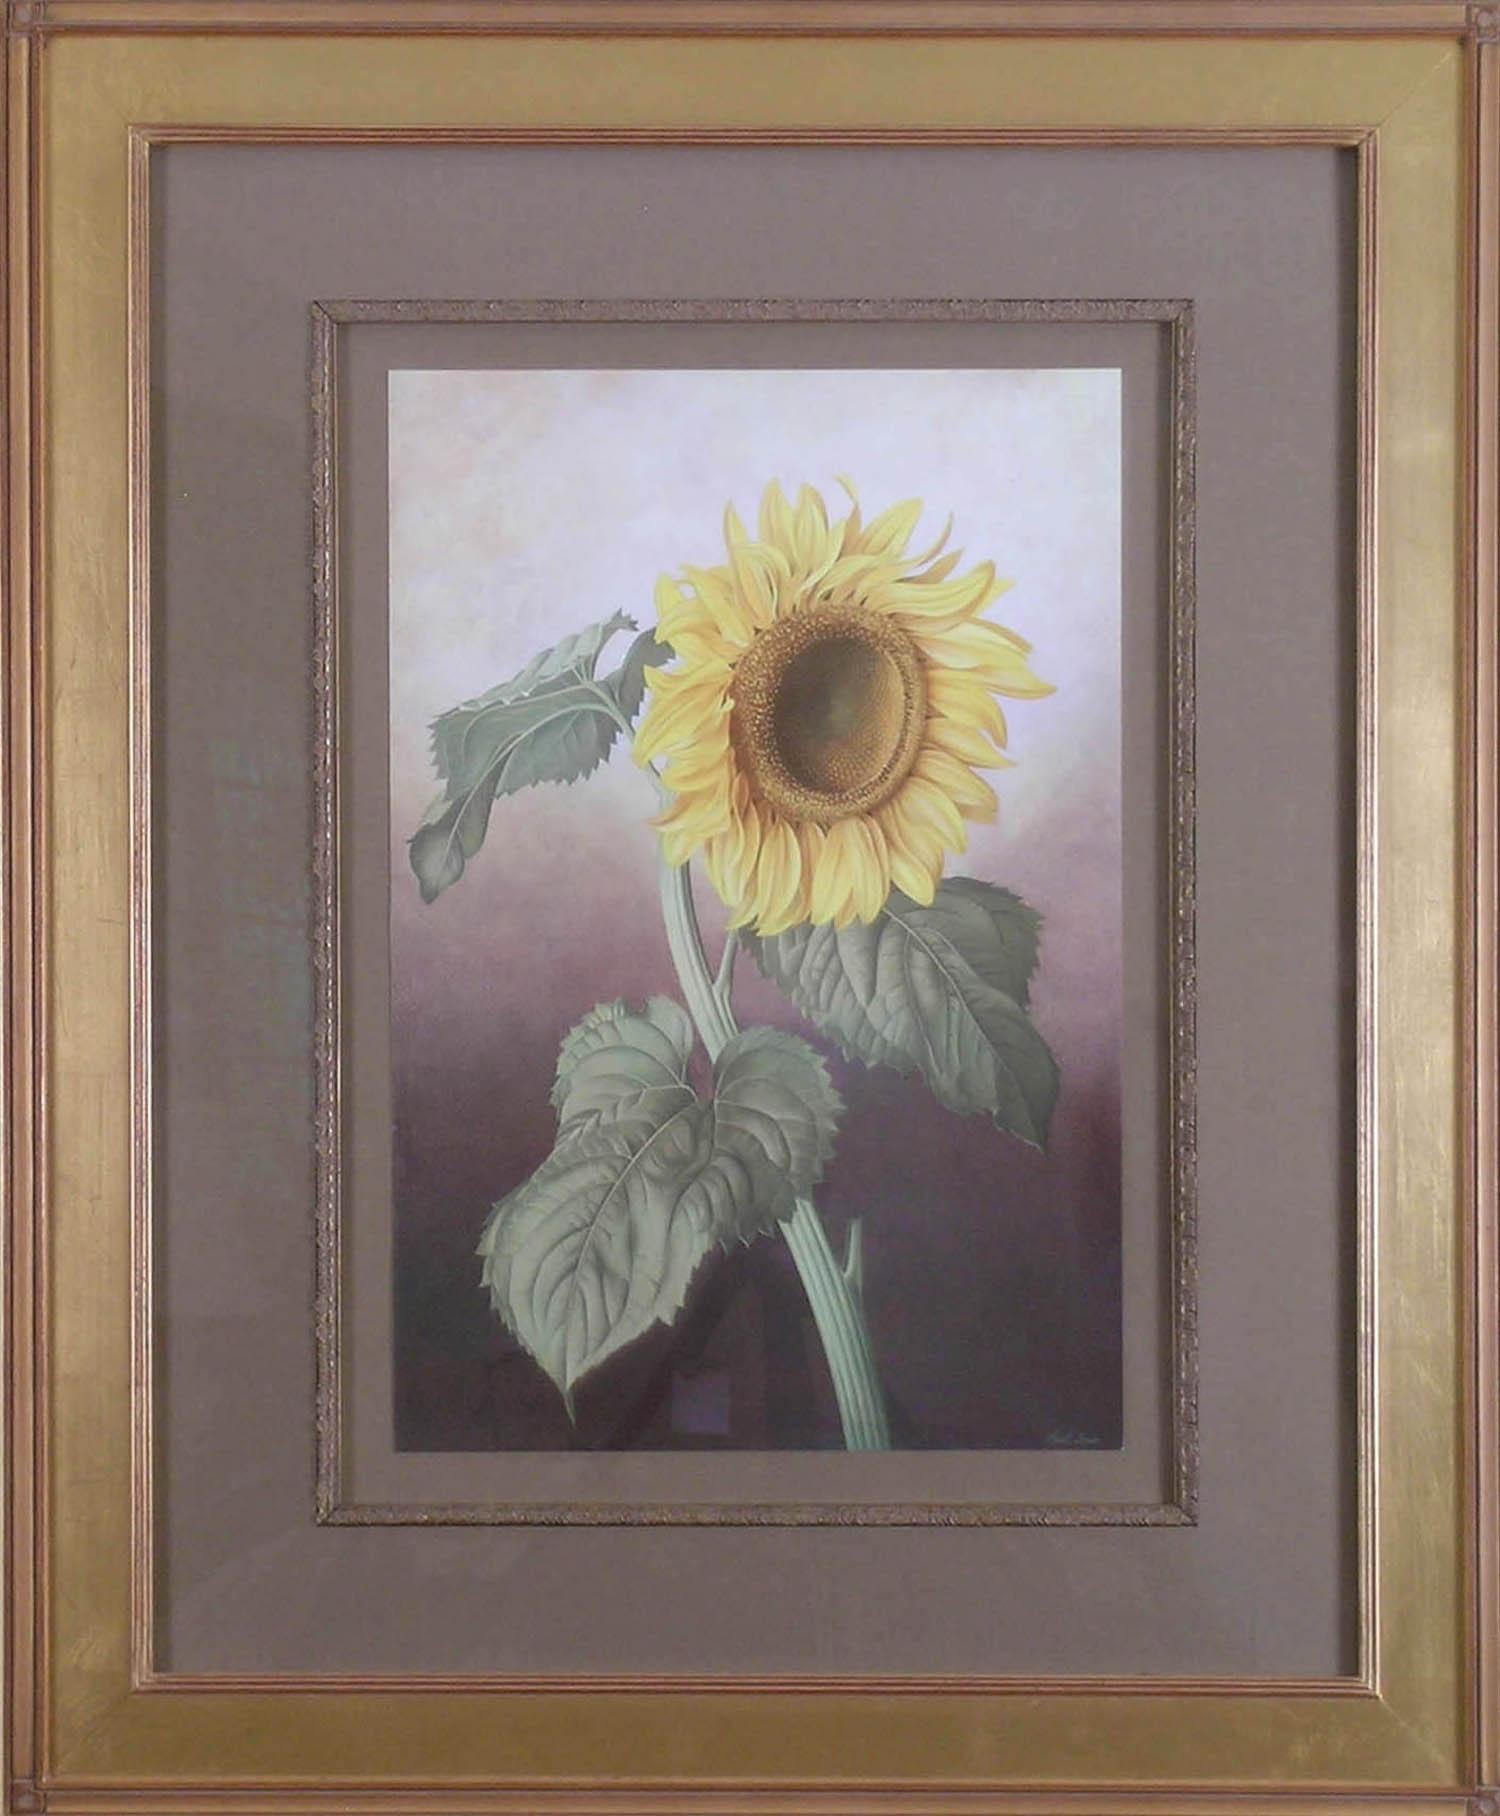 Sunflower (Healianthus Annus) - Academic Print by Paul Jones b.1921